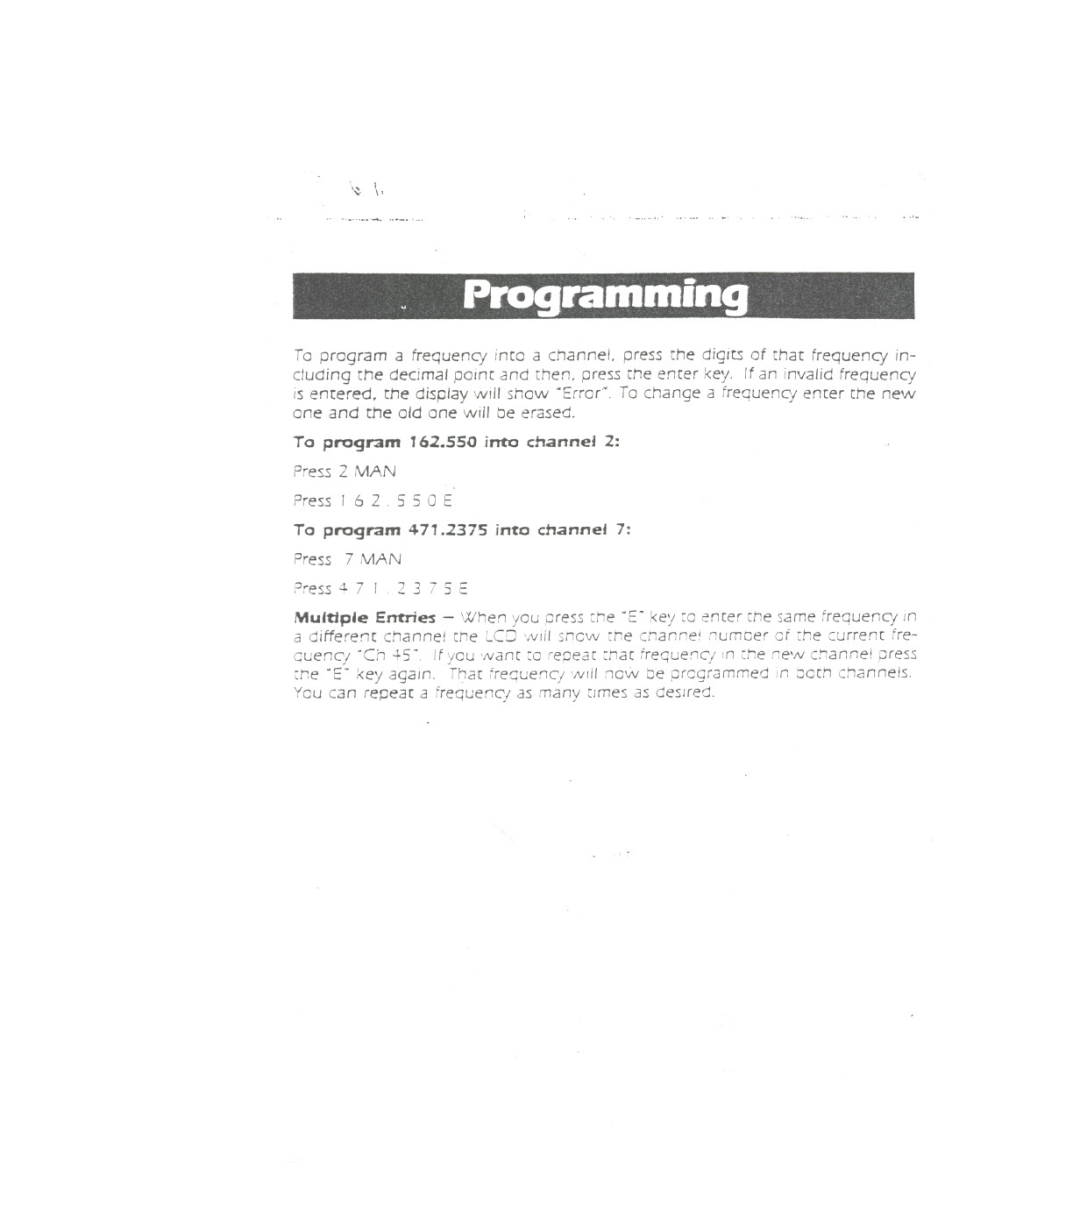 Uniden UBC100XLT manual Plggr@mmri9, Press 1 62.550 E To program 471.2375 into channef, Press 7 MAN 